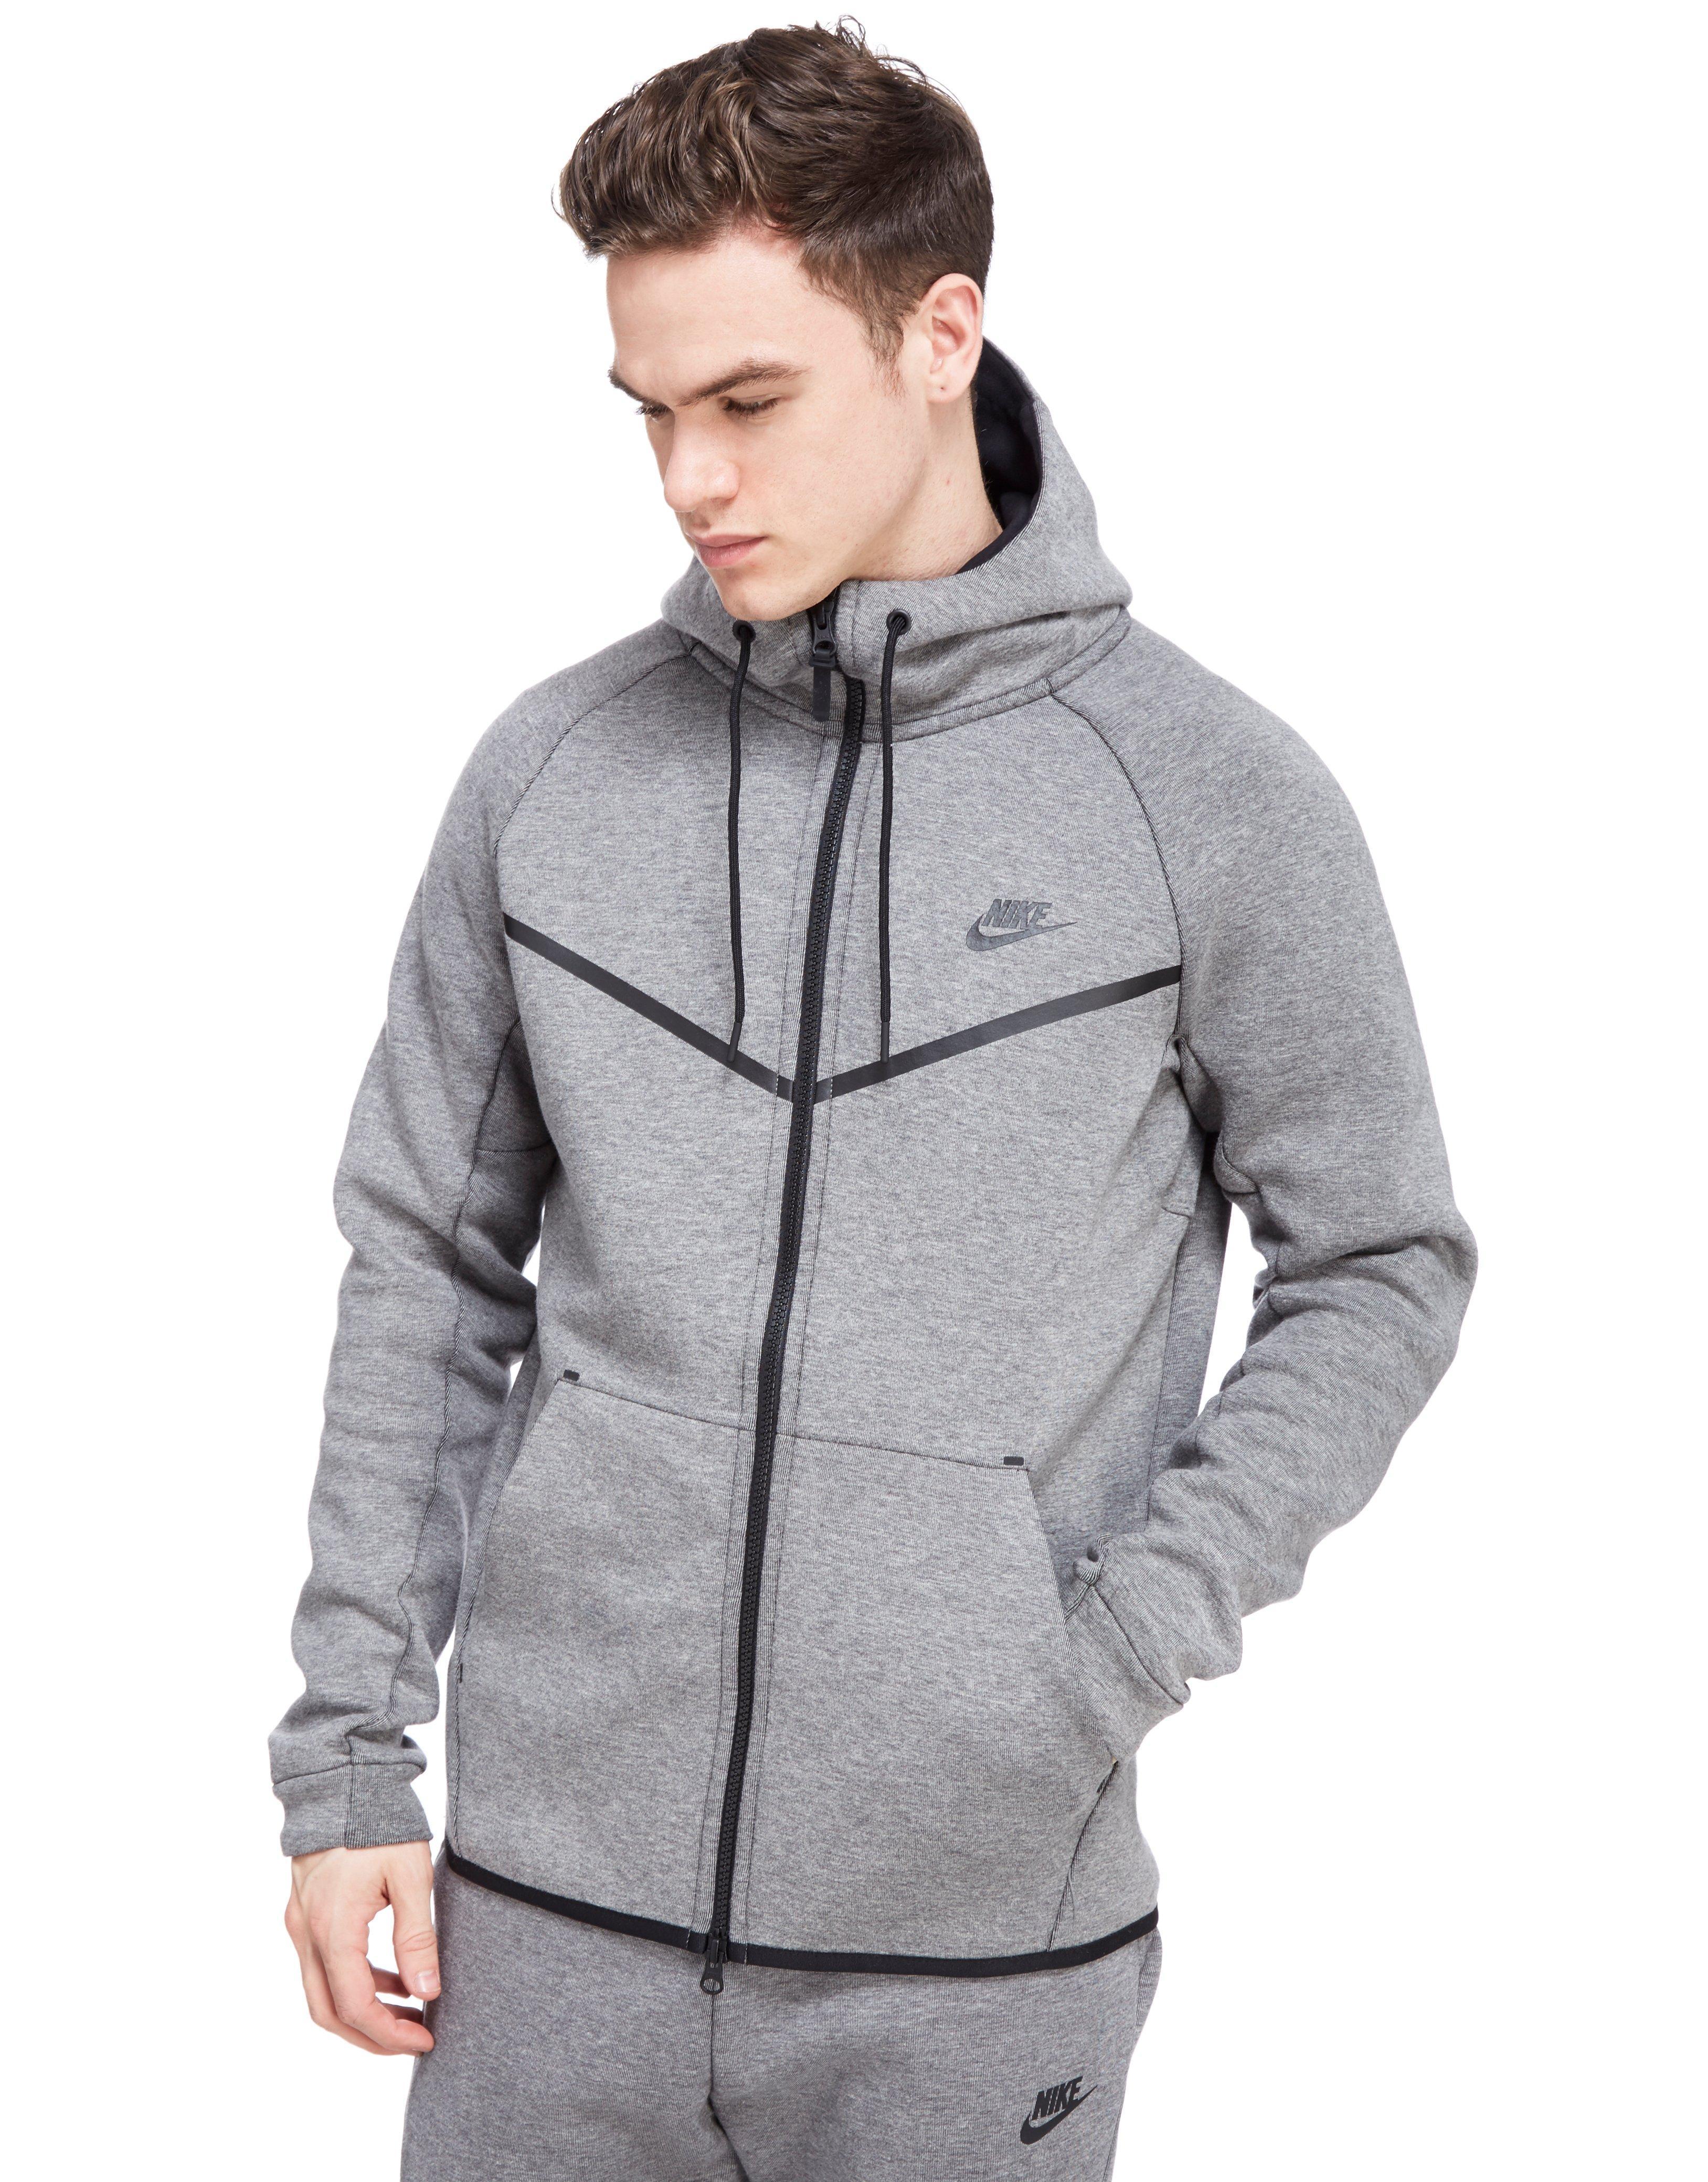 Nike Tech Fleece Windrunner Full Zip Hoodie in Grey (Gray) for Men - Lyst